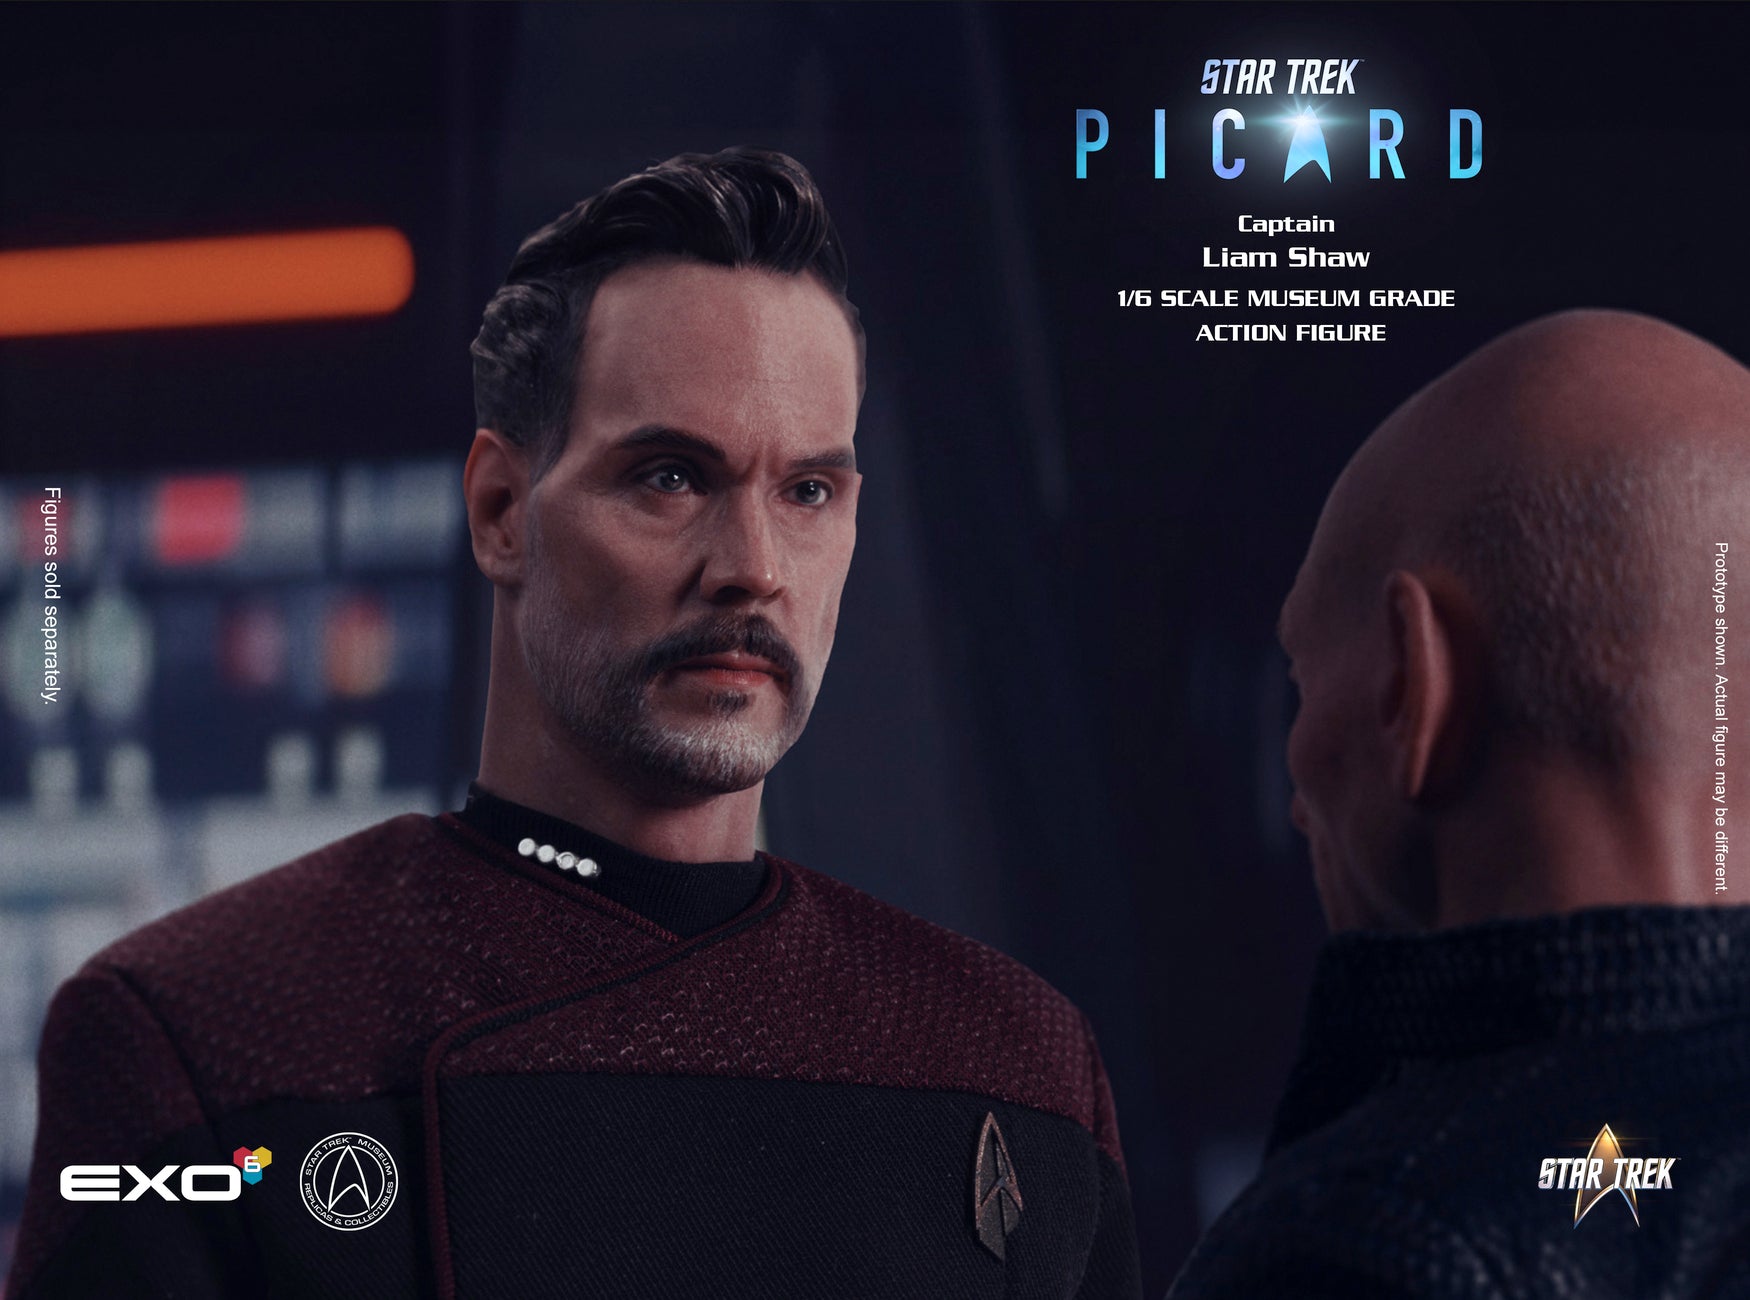 Captain Liam Shaw: Star Trek: Picard: Sixth Scale: EX0-6